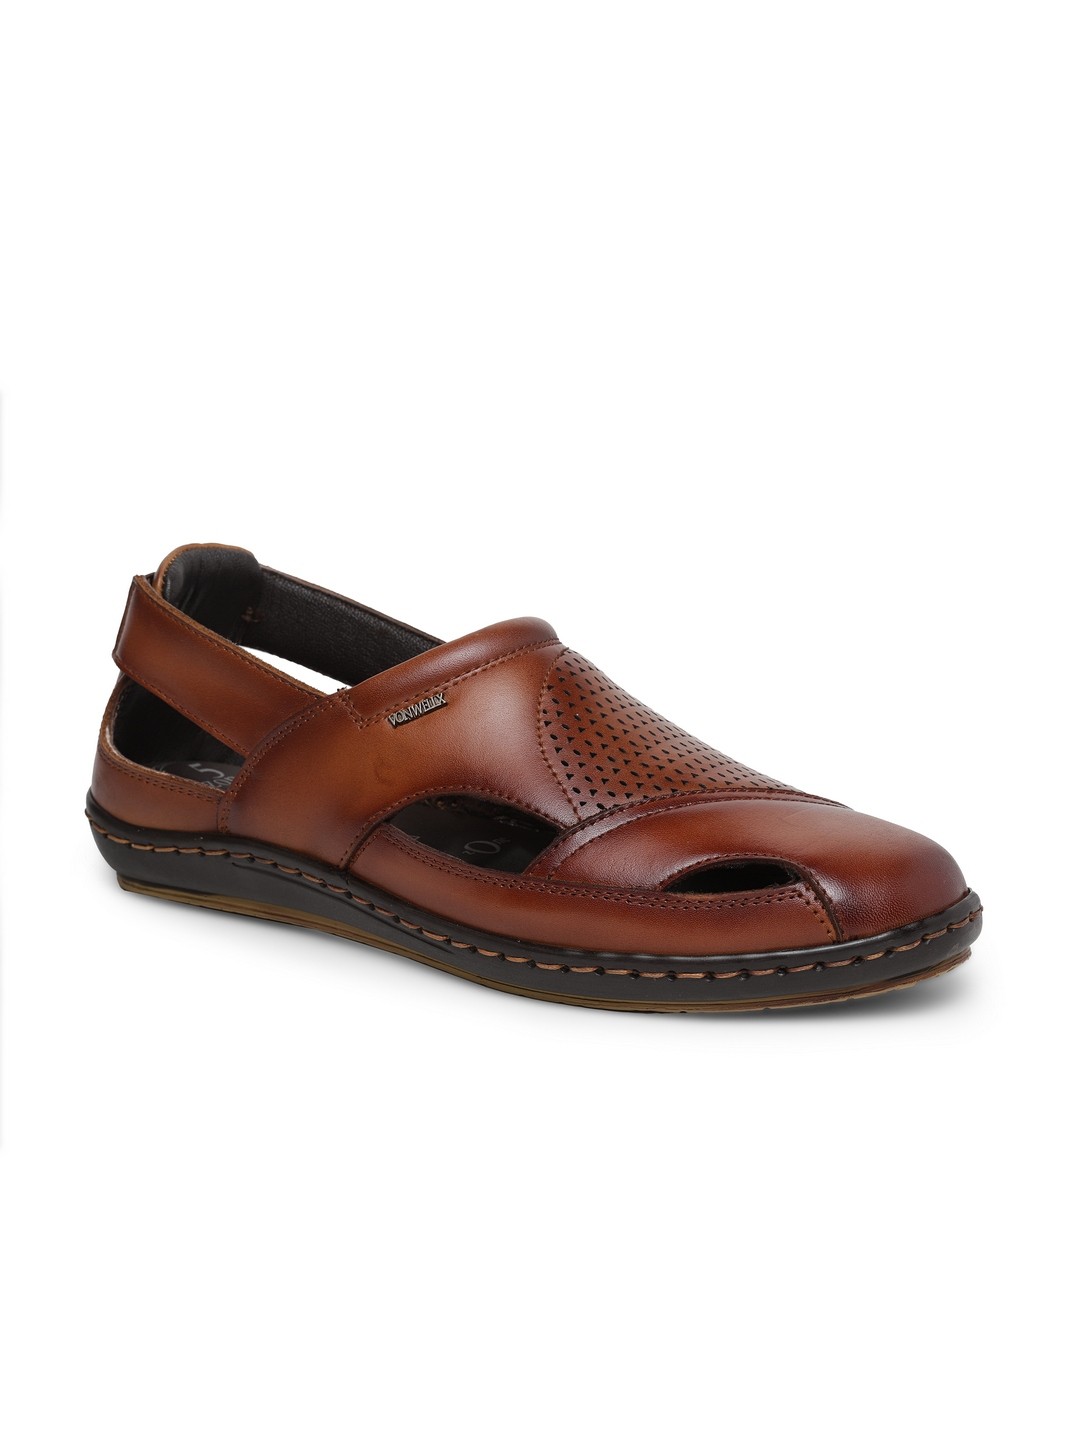 Buy Von Wellx Germany Comfort Men's Tan Sandal Eddie Online in Indore